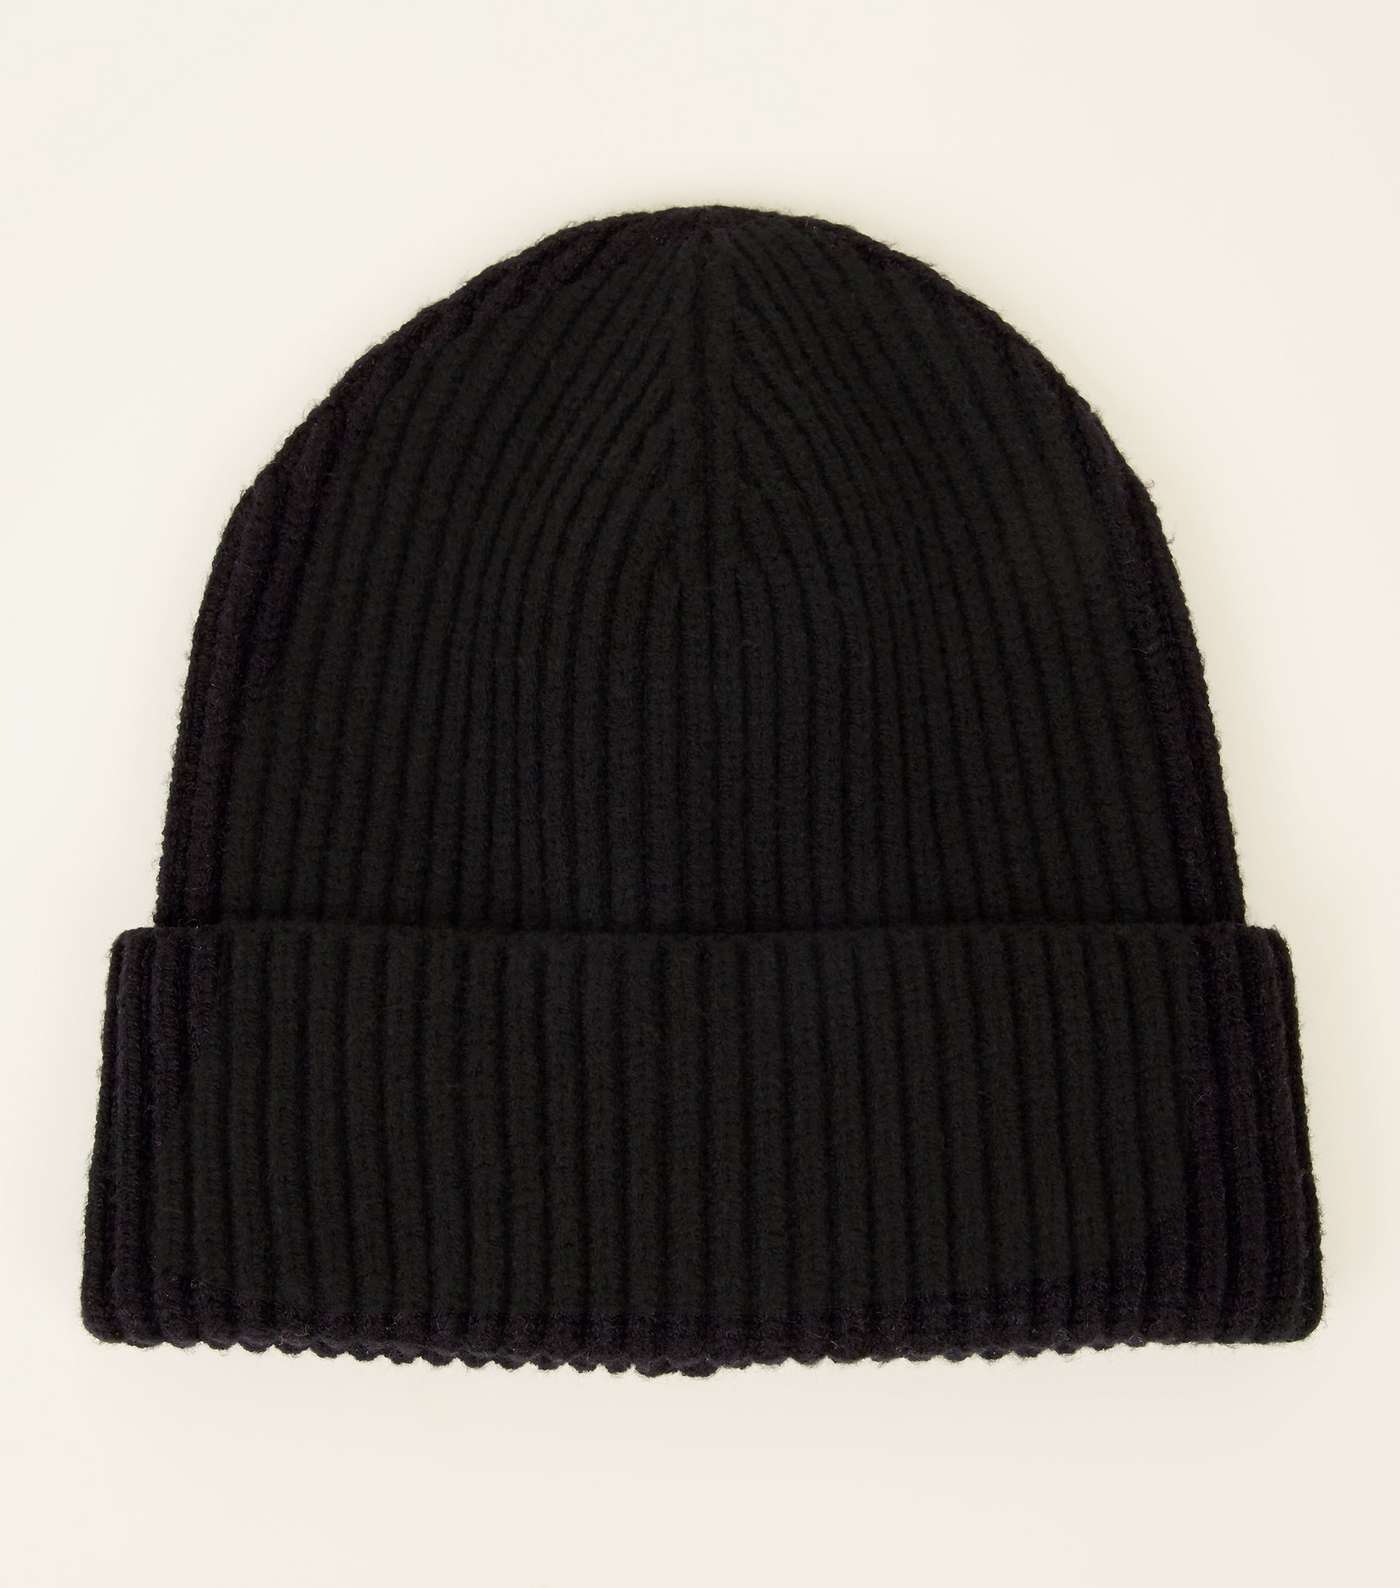 Black Ribbed Beanie Hat